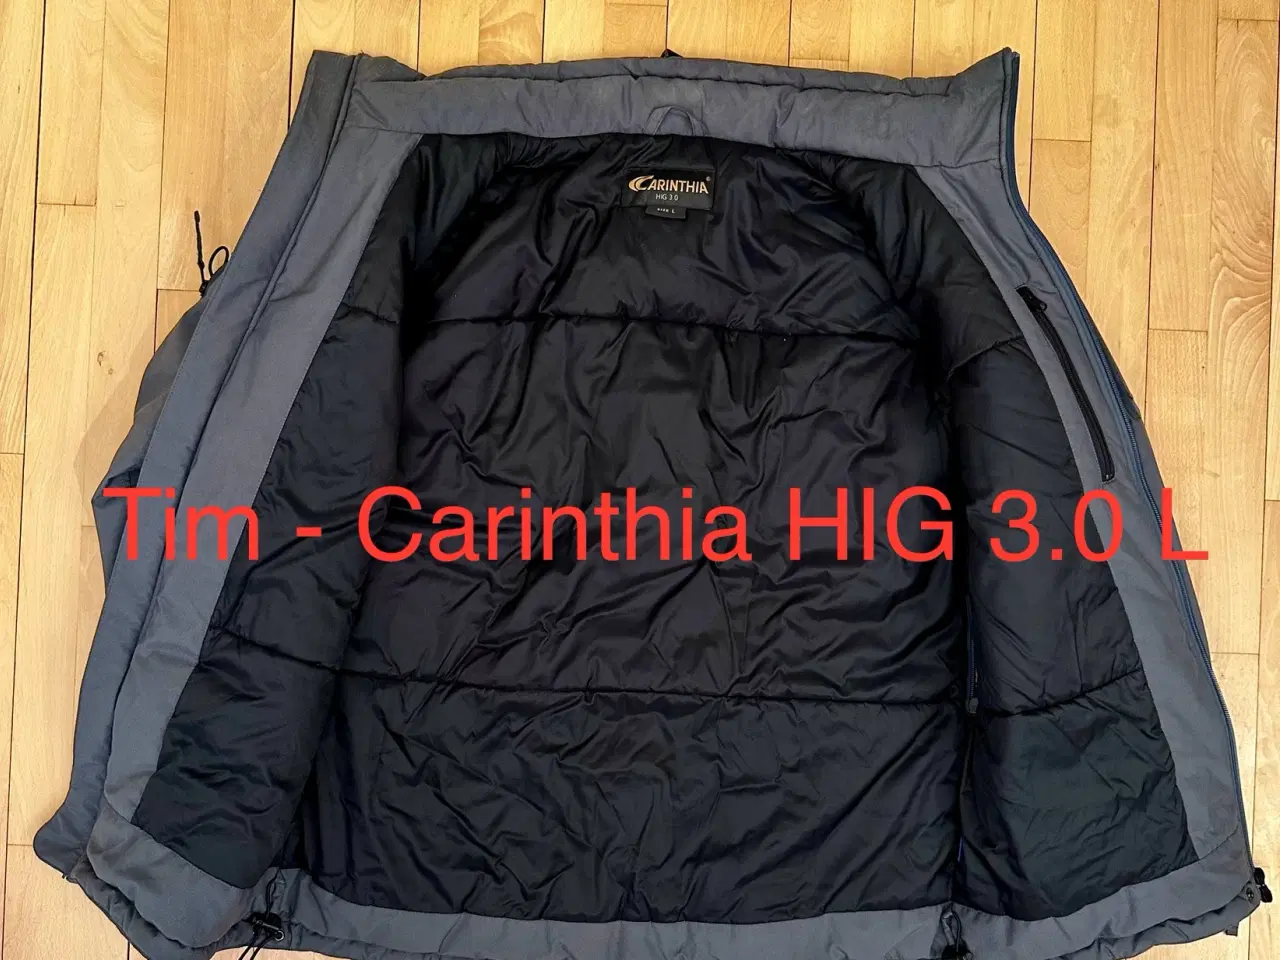 Billede 2 - Carinthia HIG 3.0 L 